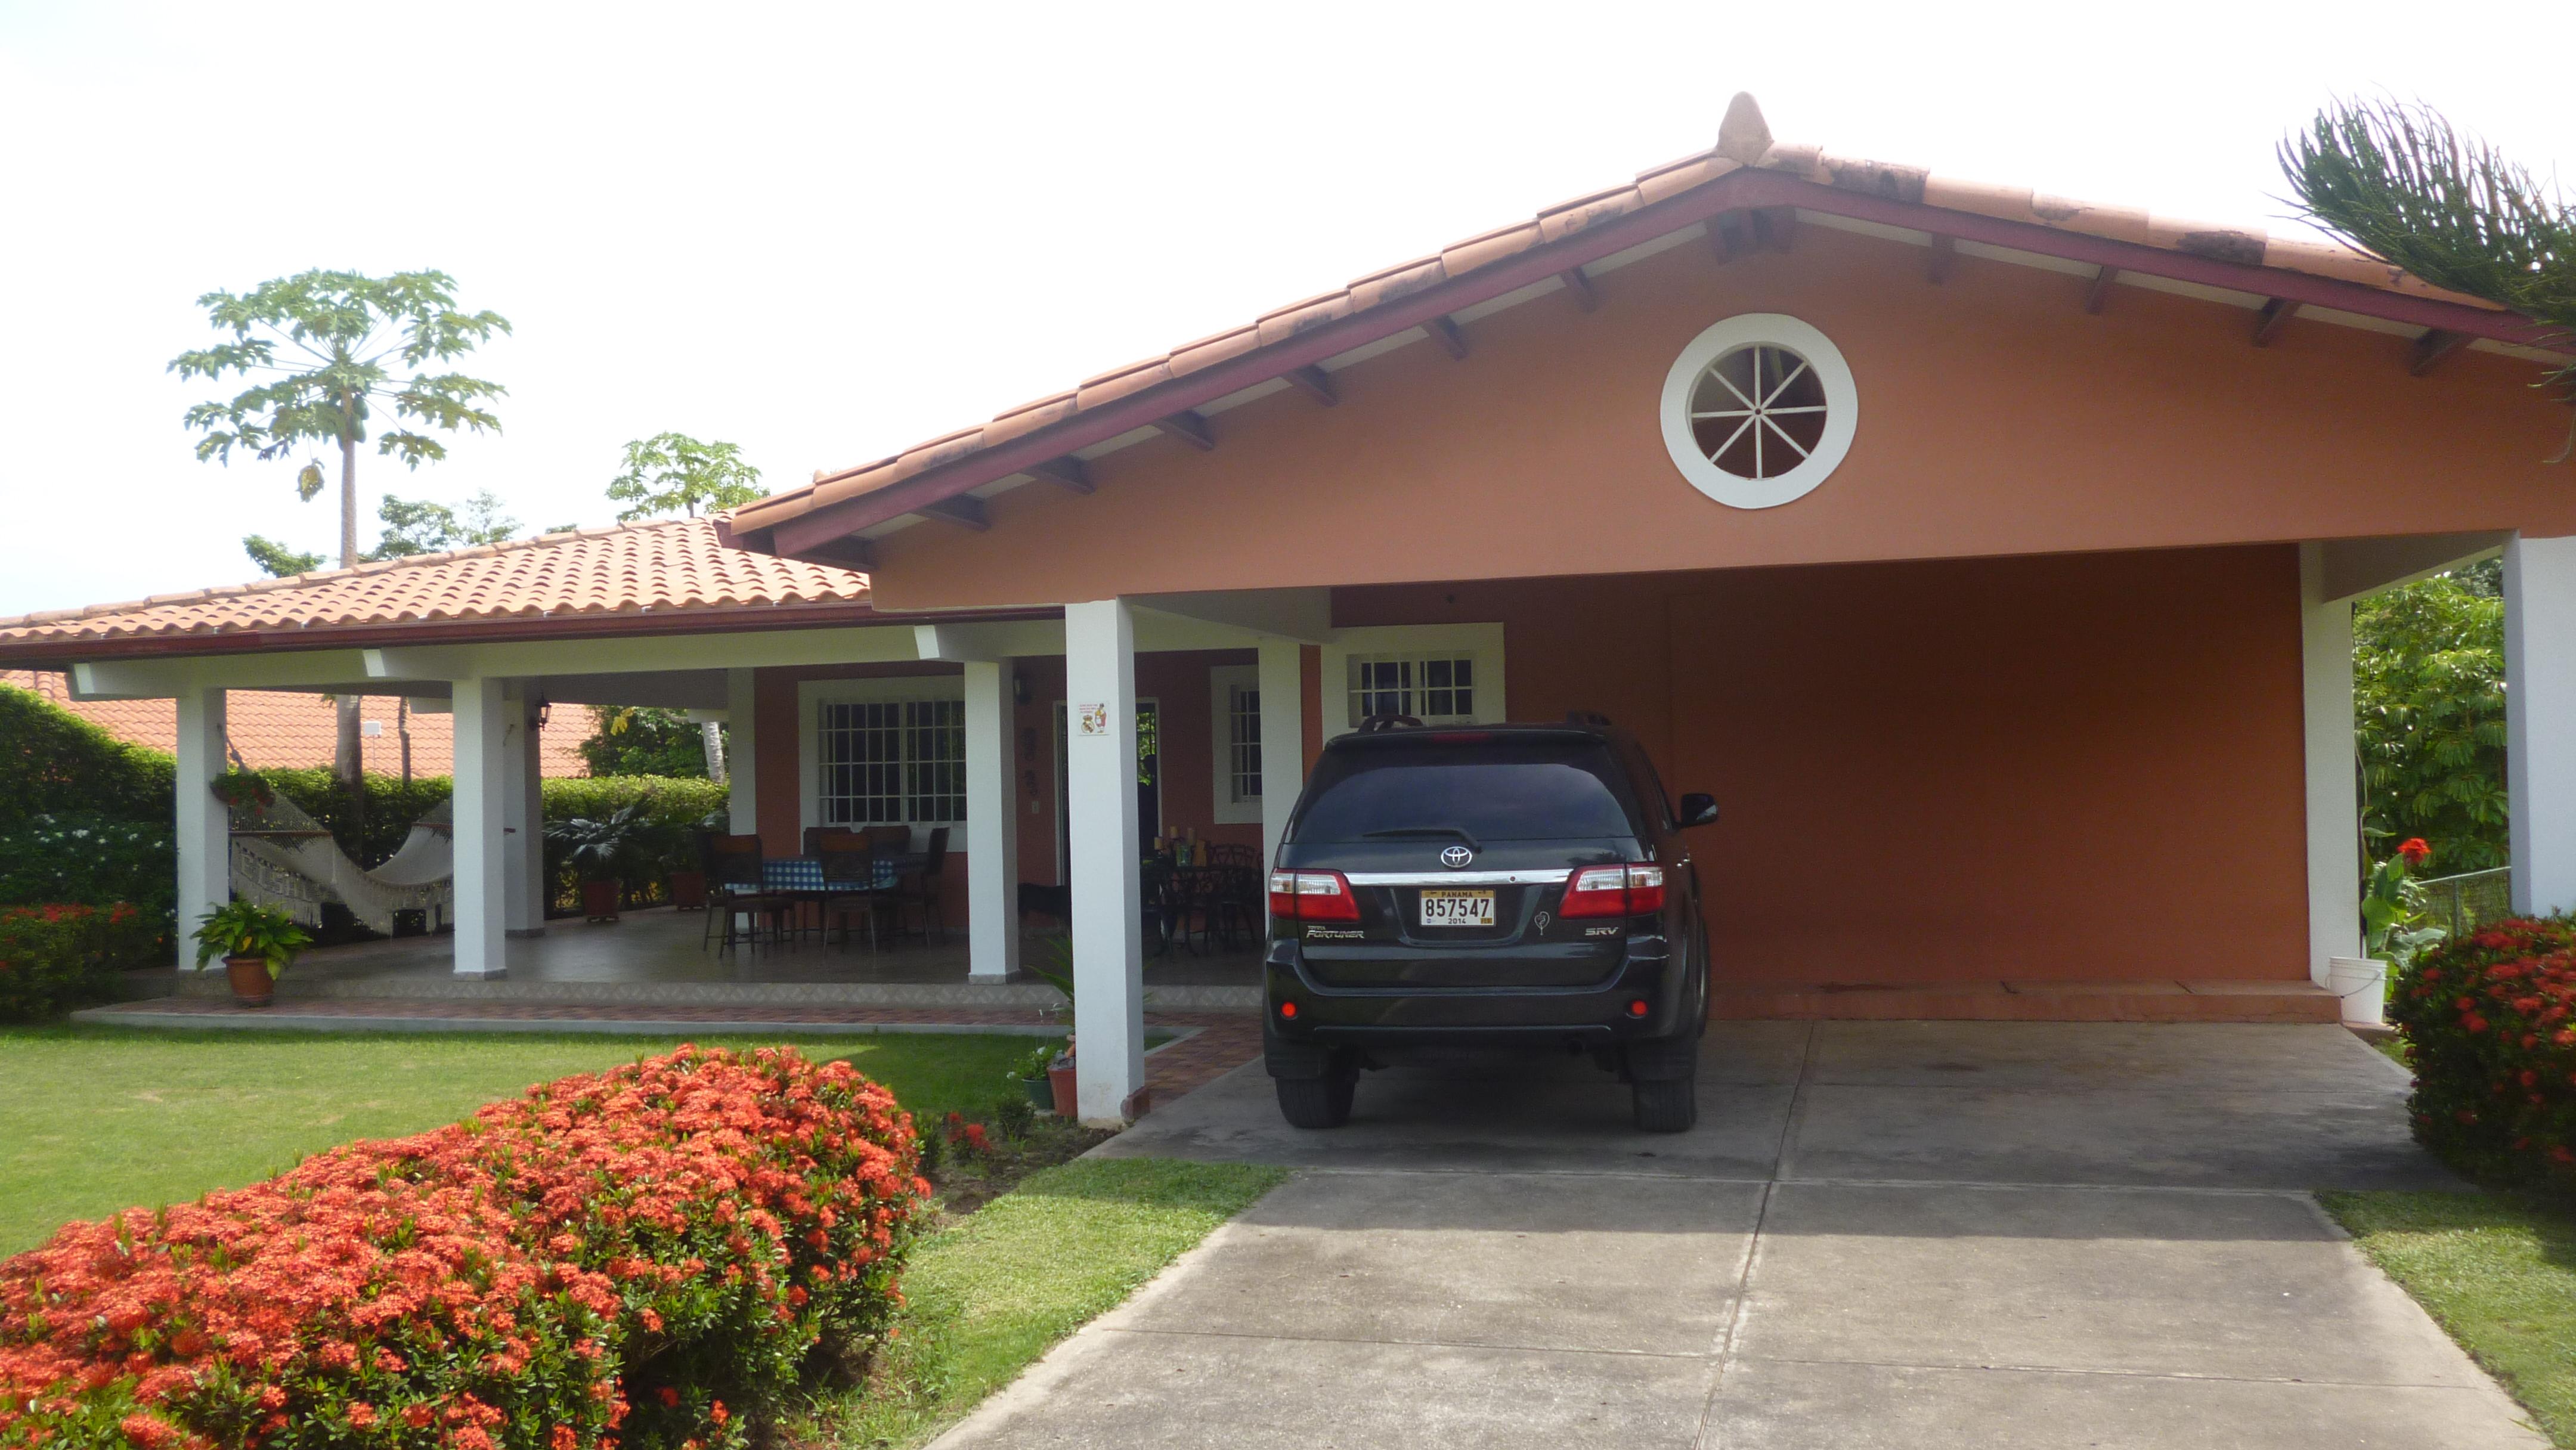 PANAMA, CORONADO COUNTRY CLUB, HOUSE.